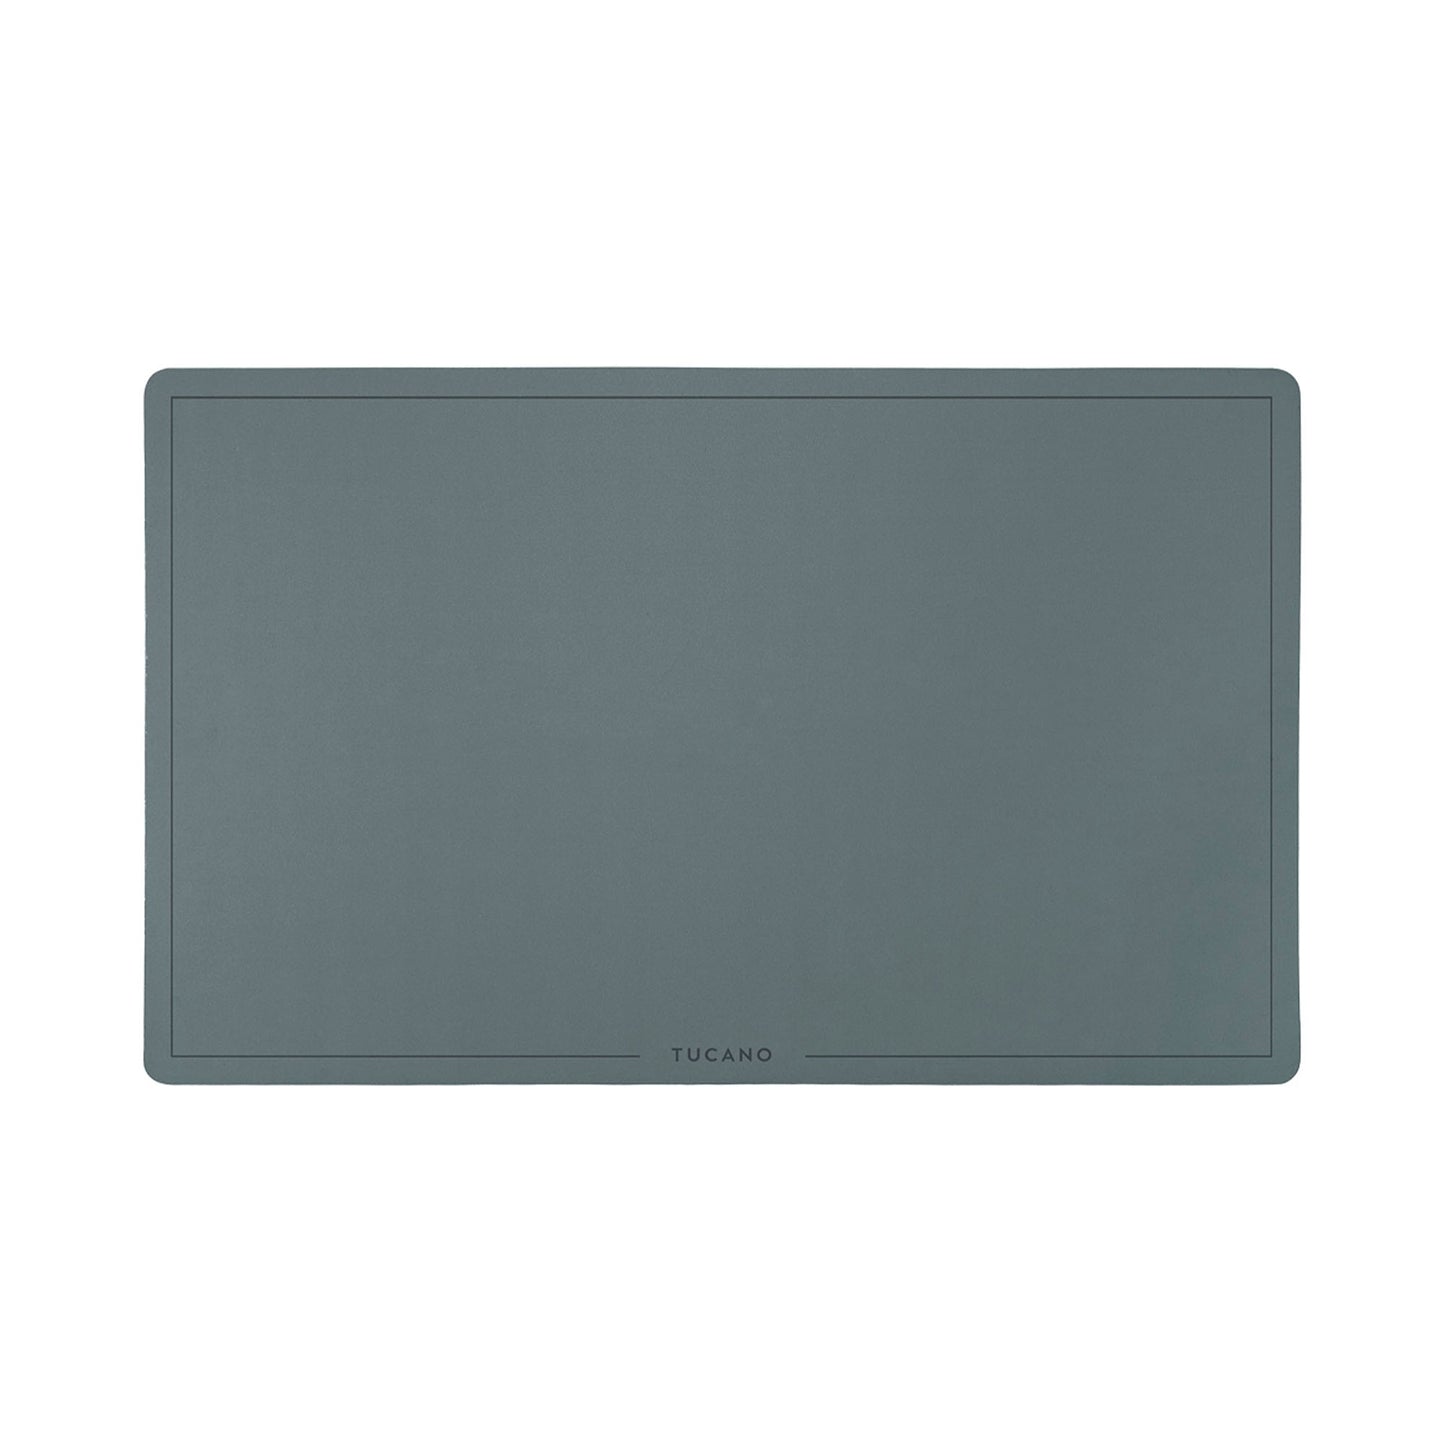 TUCANO Desk Pad - Dark Gray